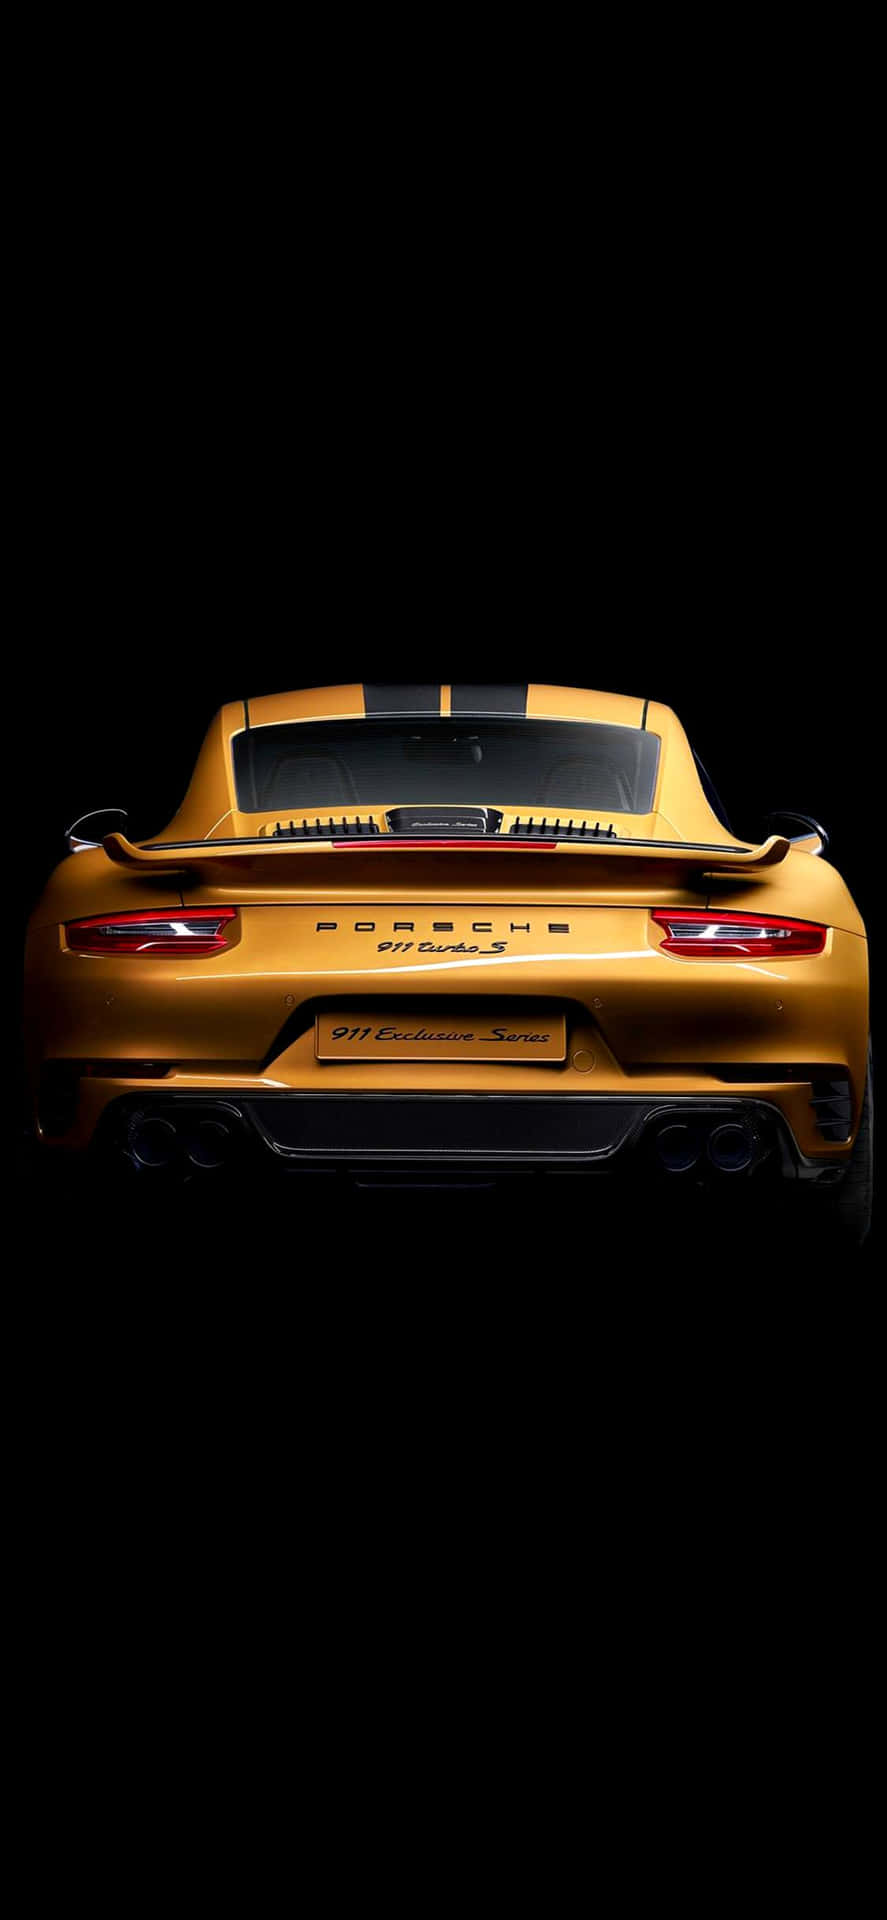 Wallpaper Porsche Porsche 911 Cars Sports Car dr Ing h c f Porsche Ag  Background  Download Free Image